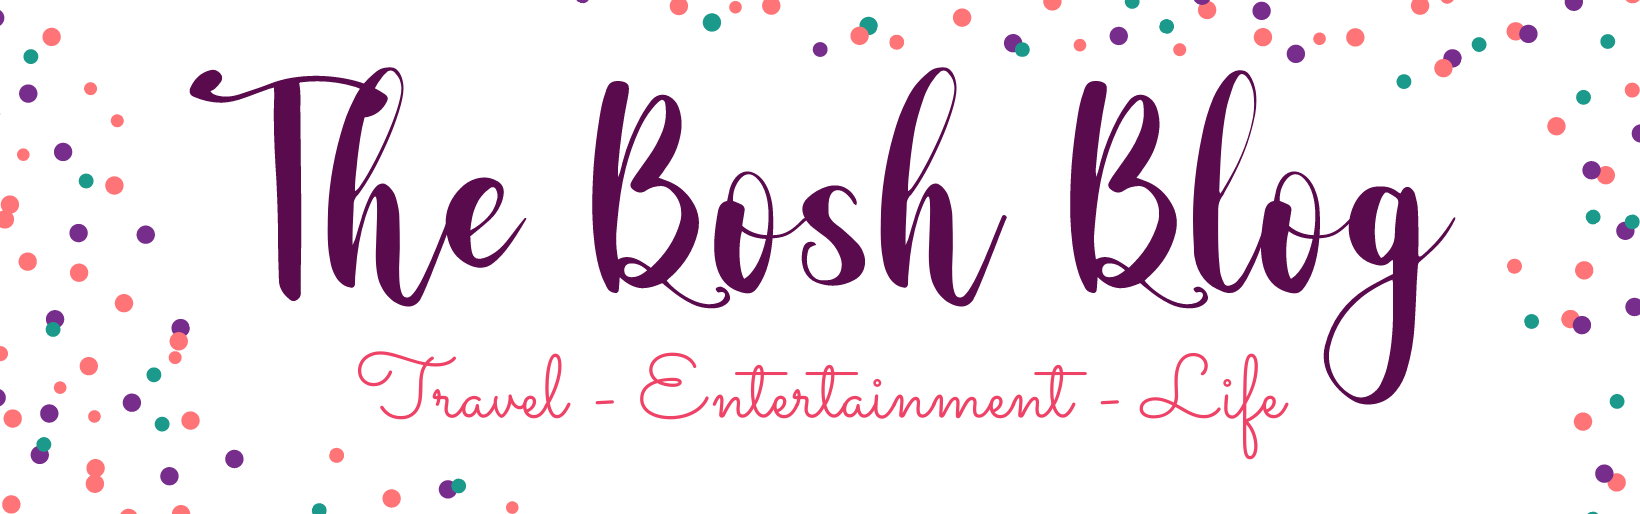 The Bosh Blog